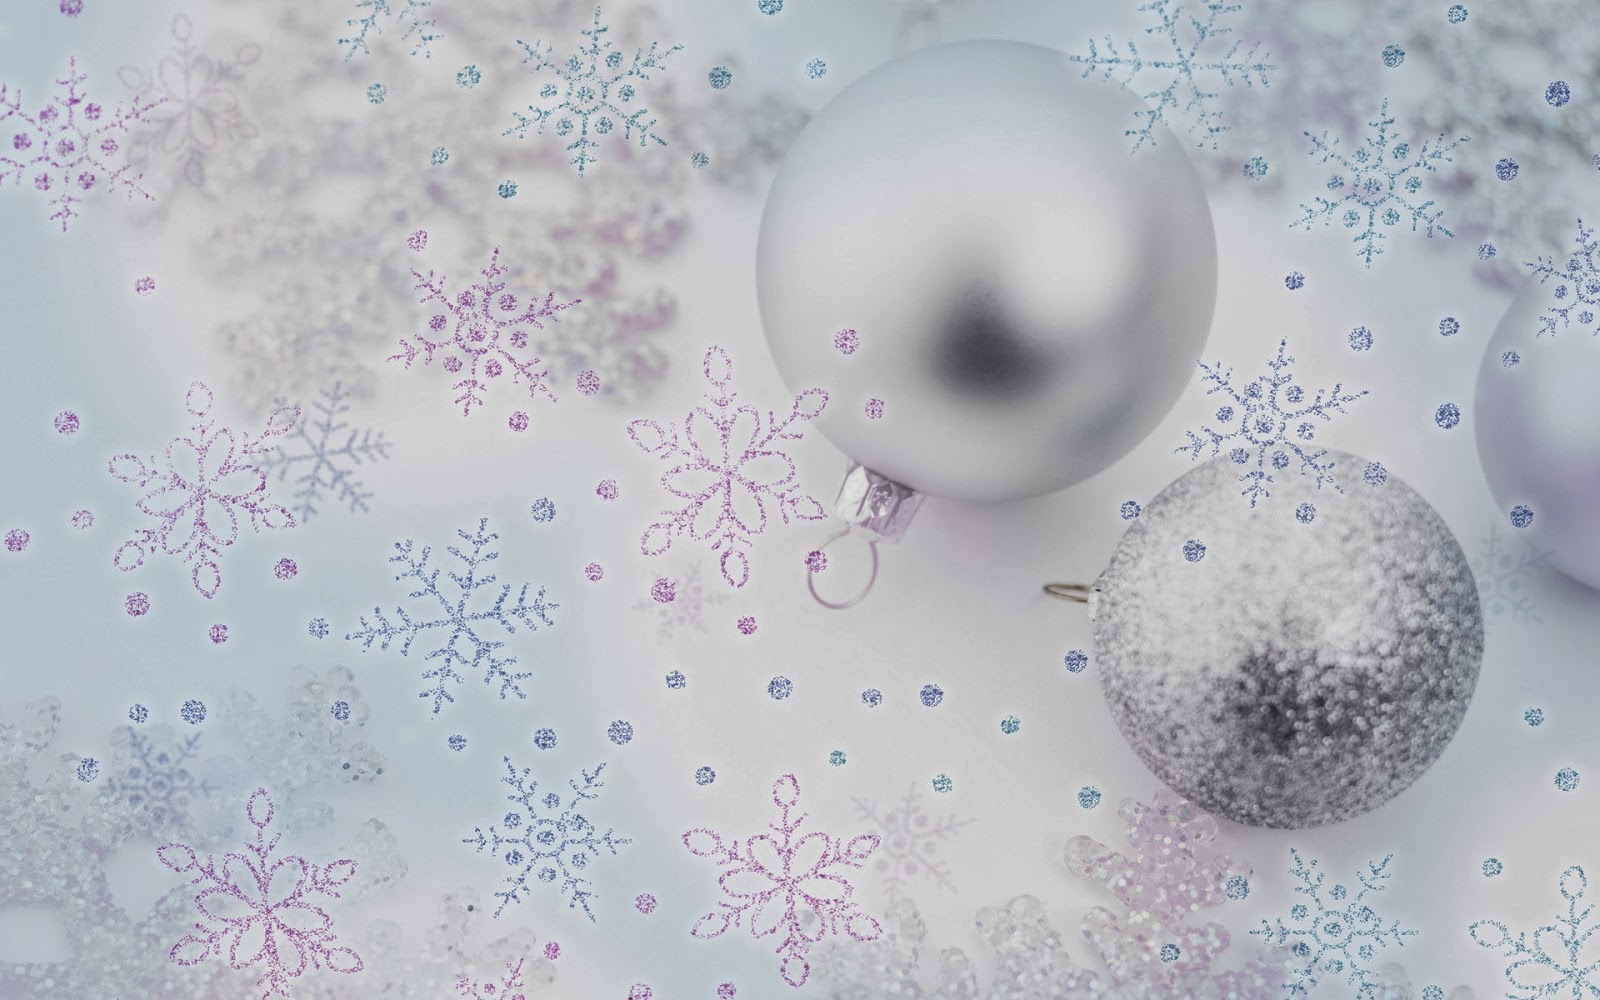 ir sms fondo de pantalla,esfera,copo de nieve,circulo,decoración navideña,plata